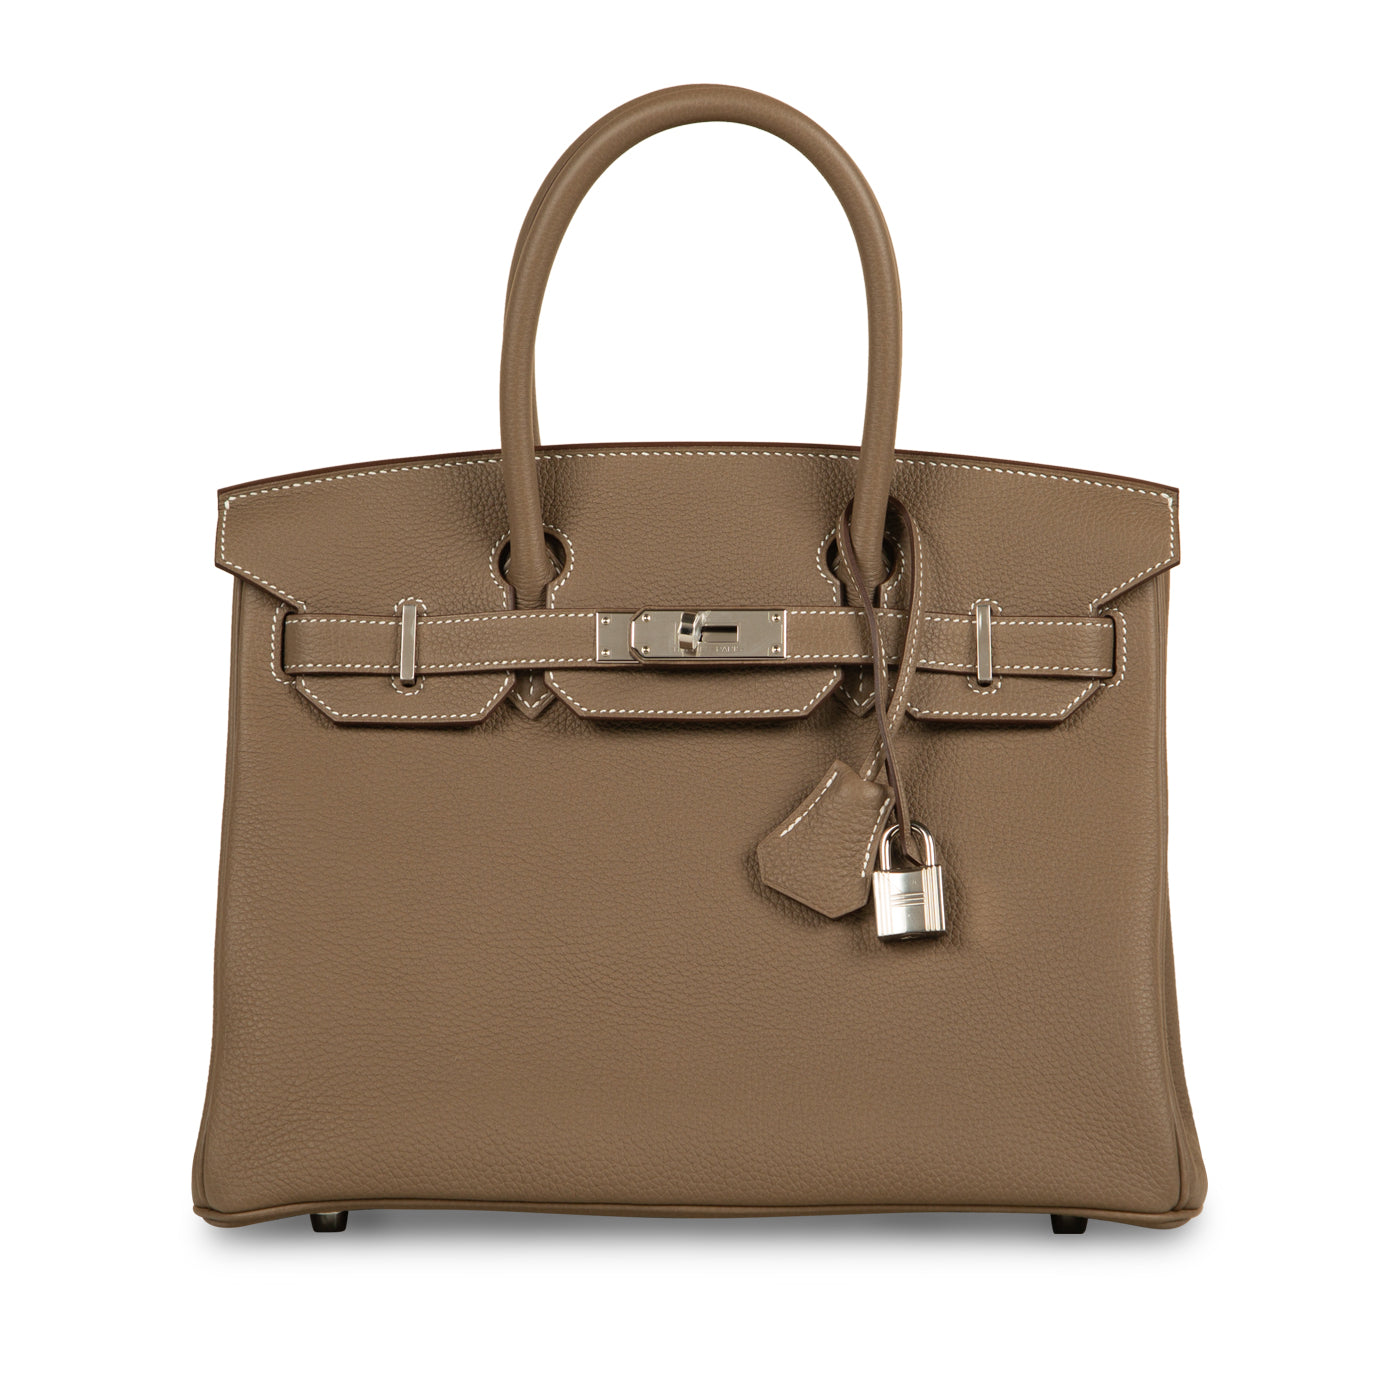 Hermès Birkin 30 Togo Leather Handbag